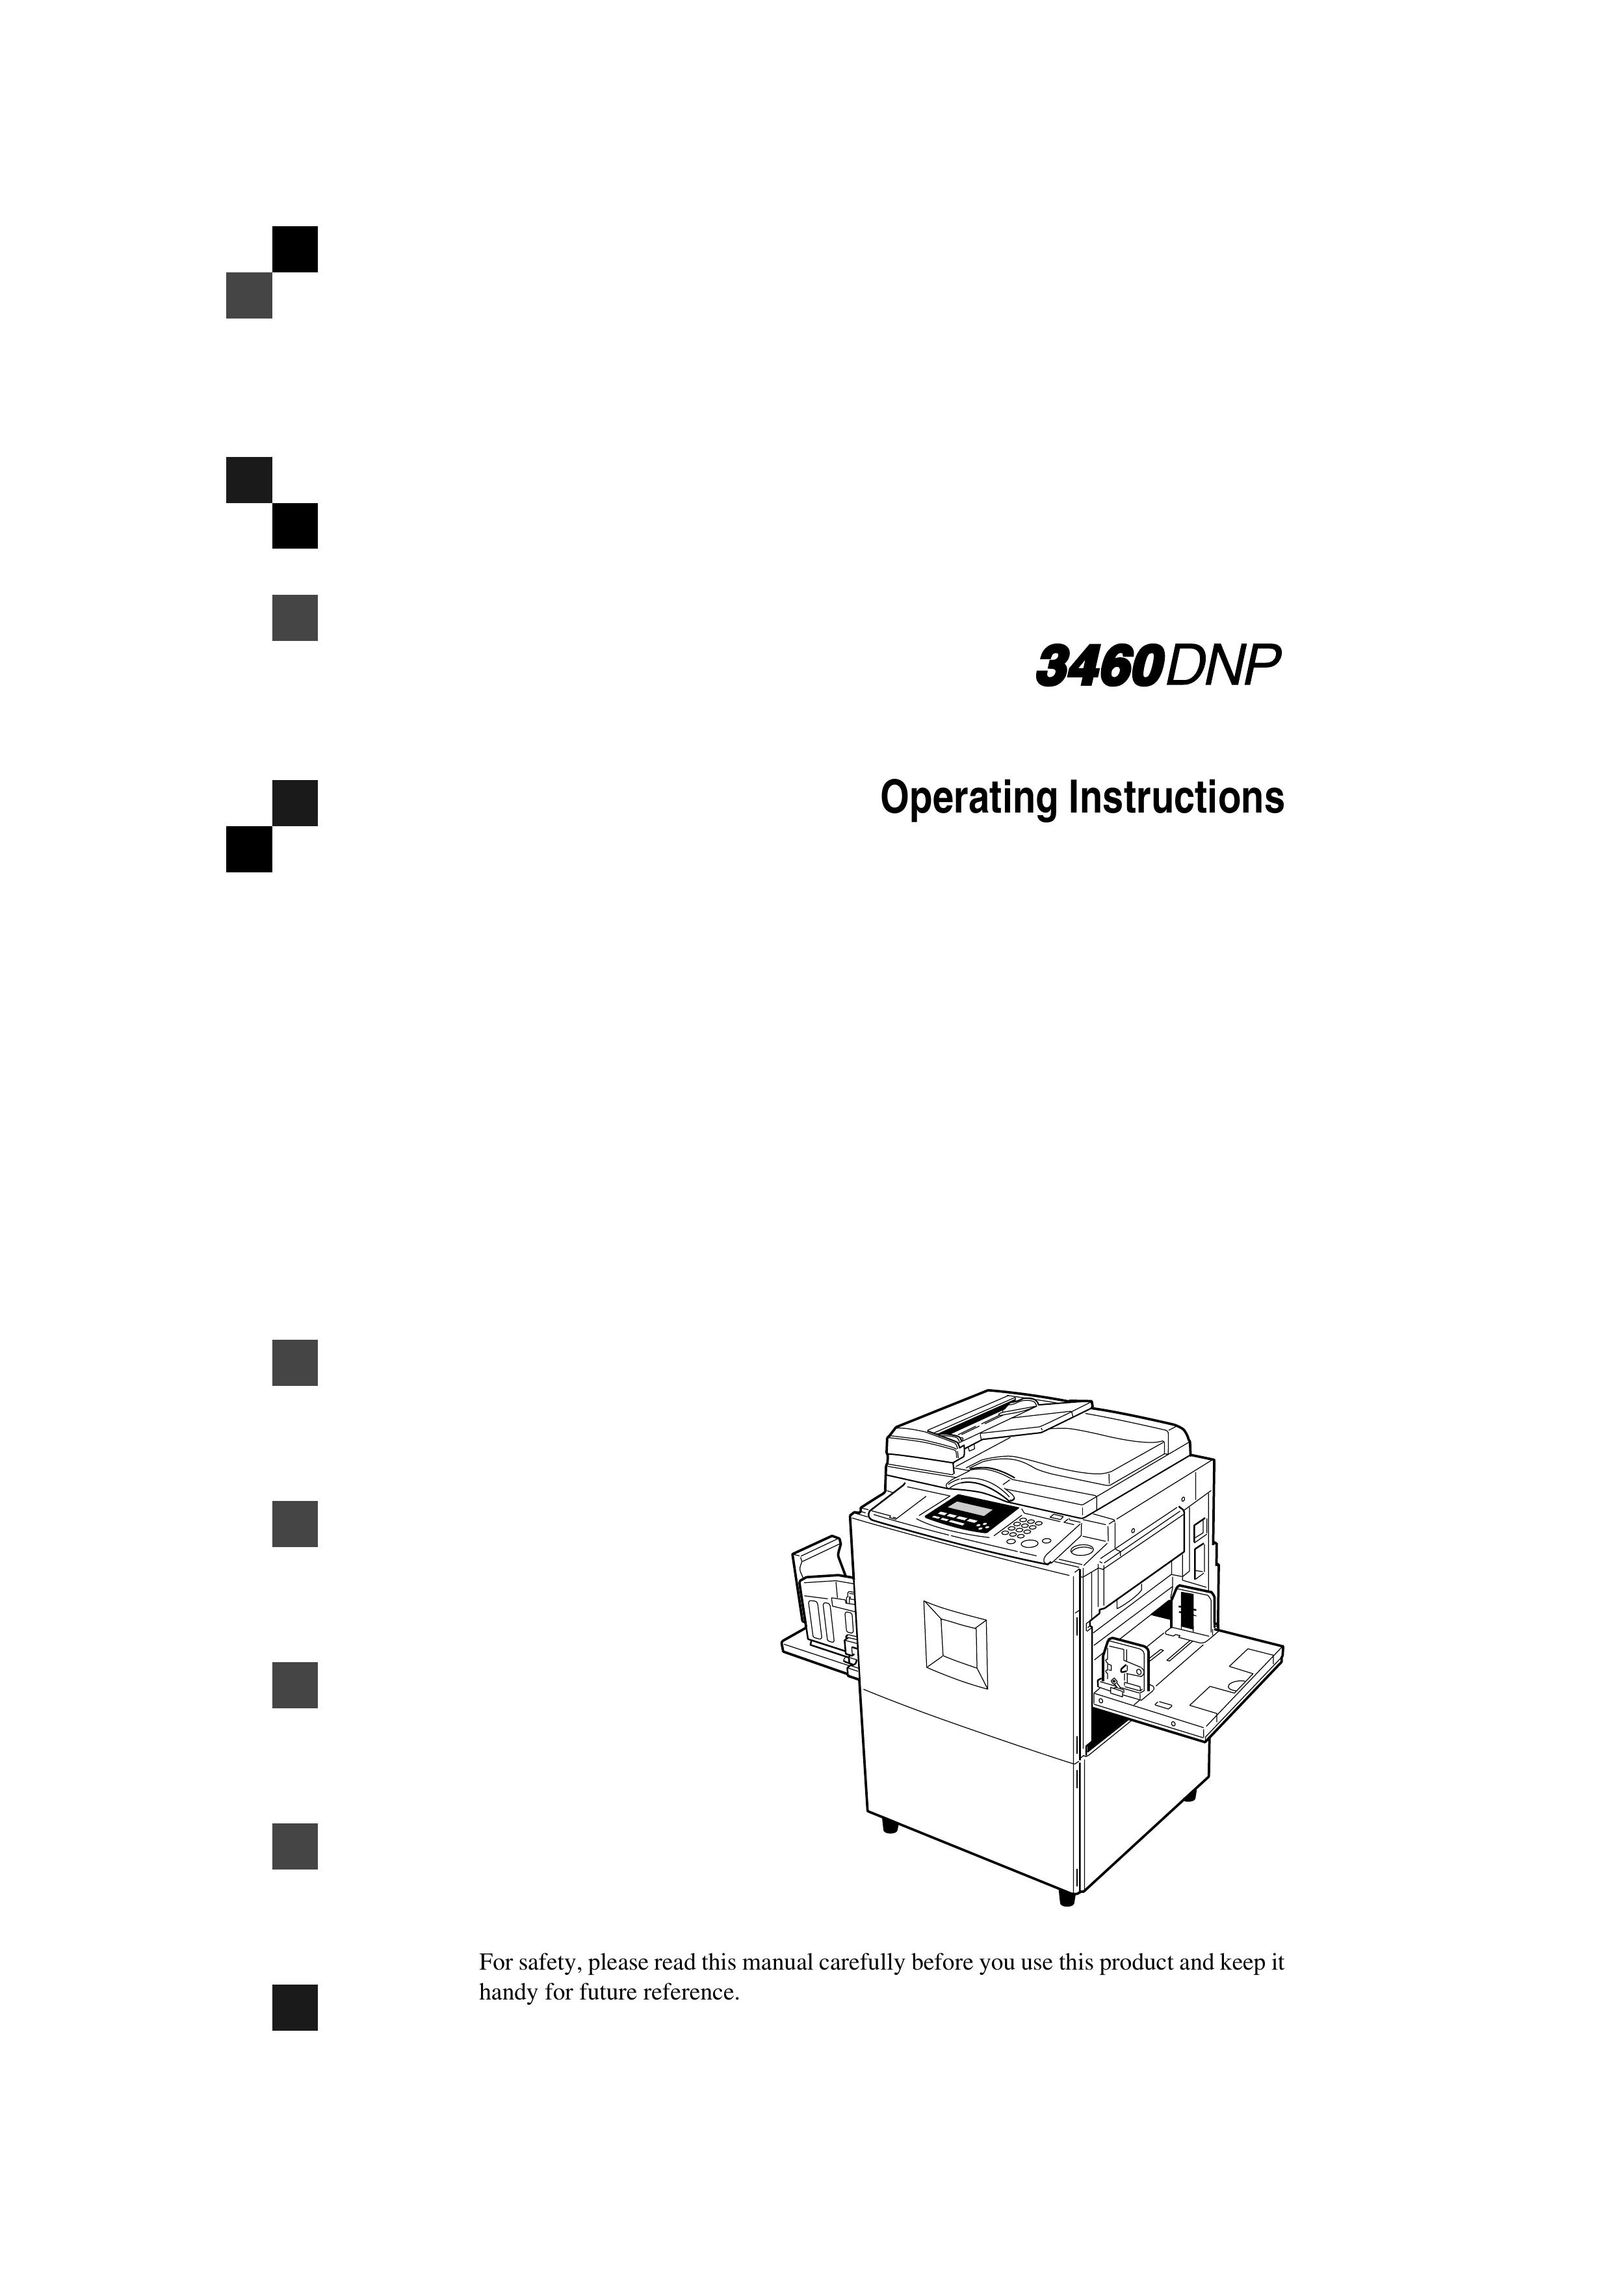 Savin 3460DNP Printer User Manual